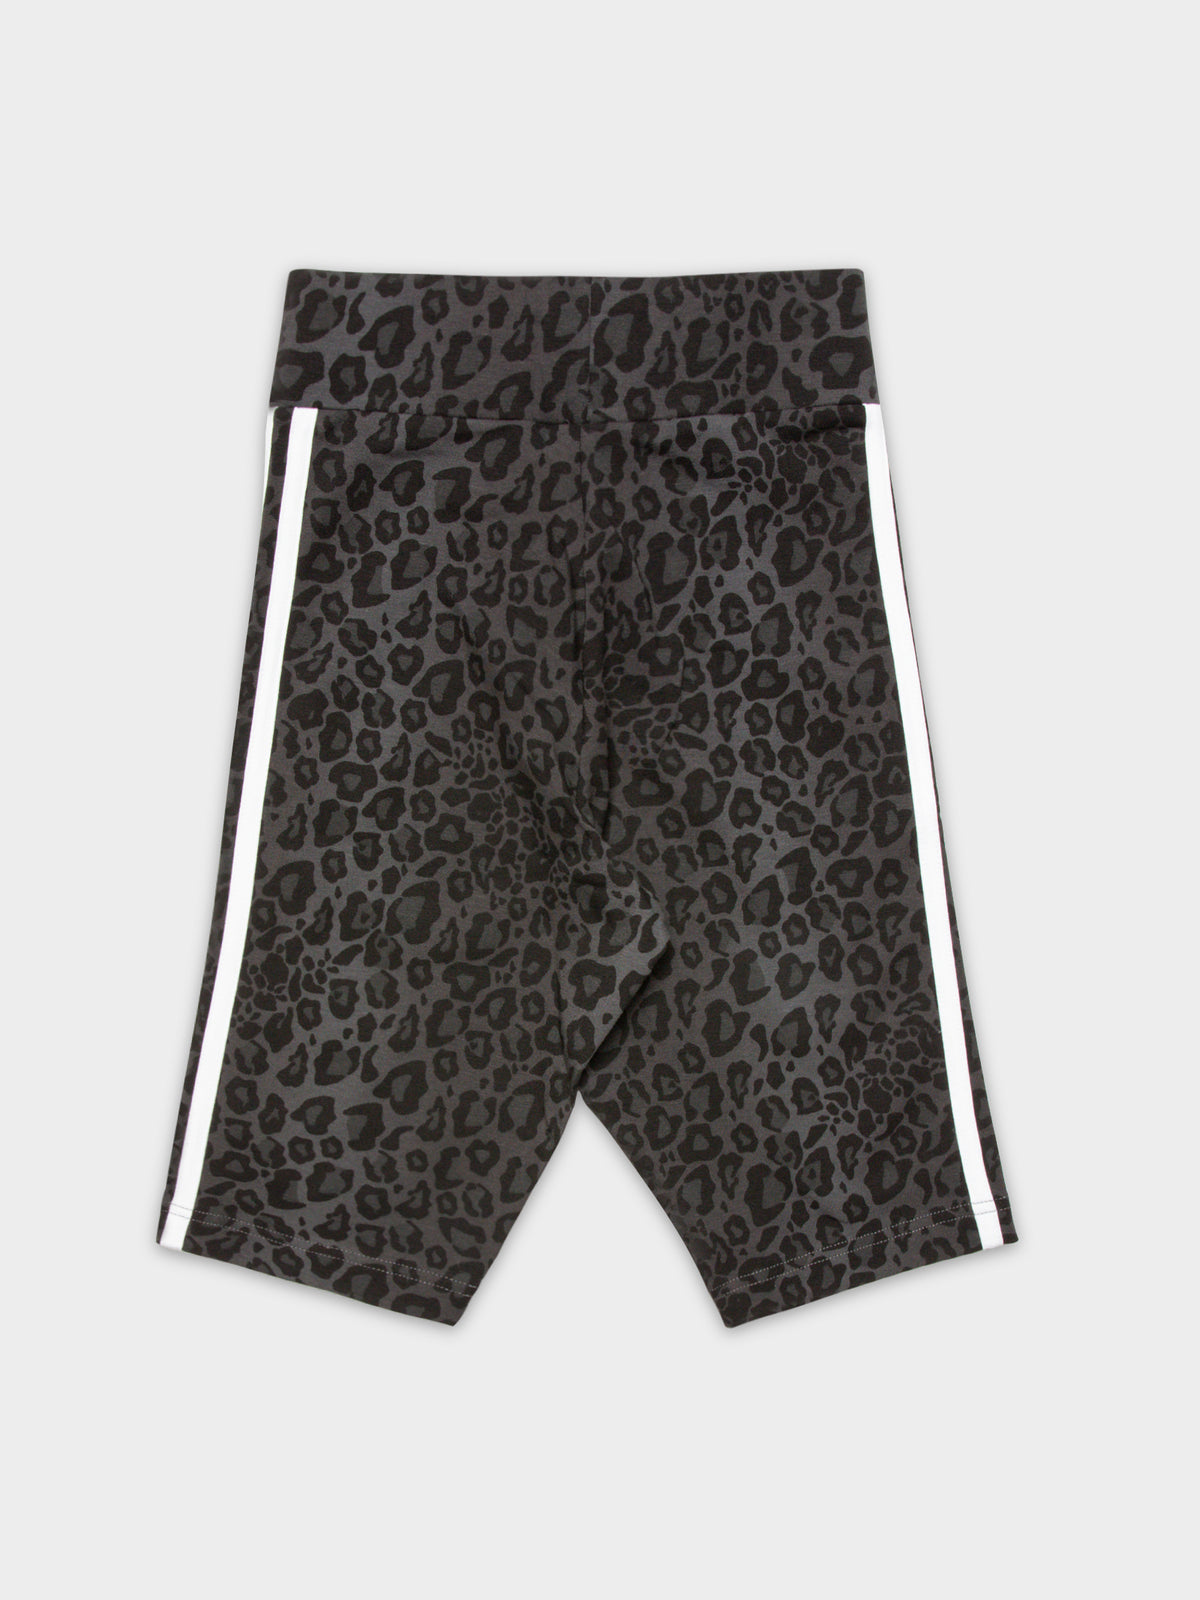 Bike Shorts in Black Leopard